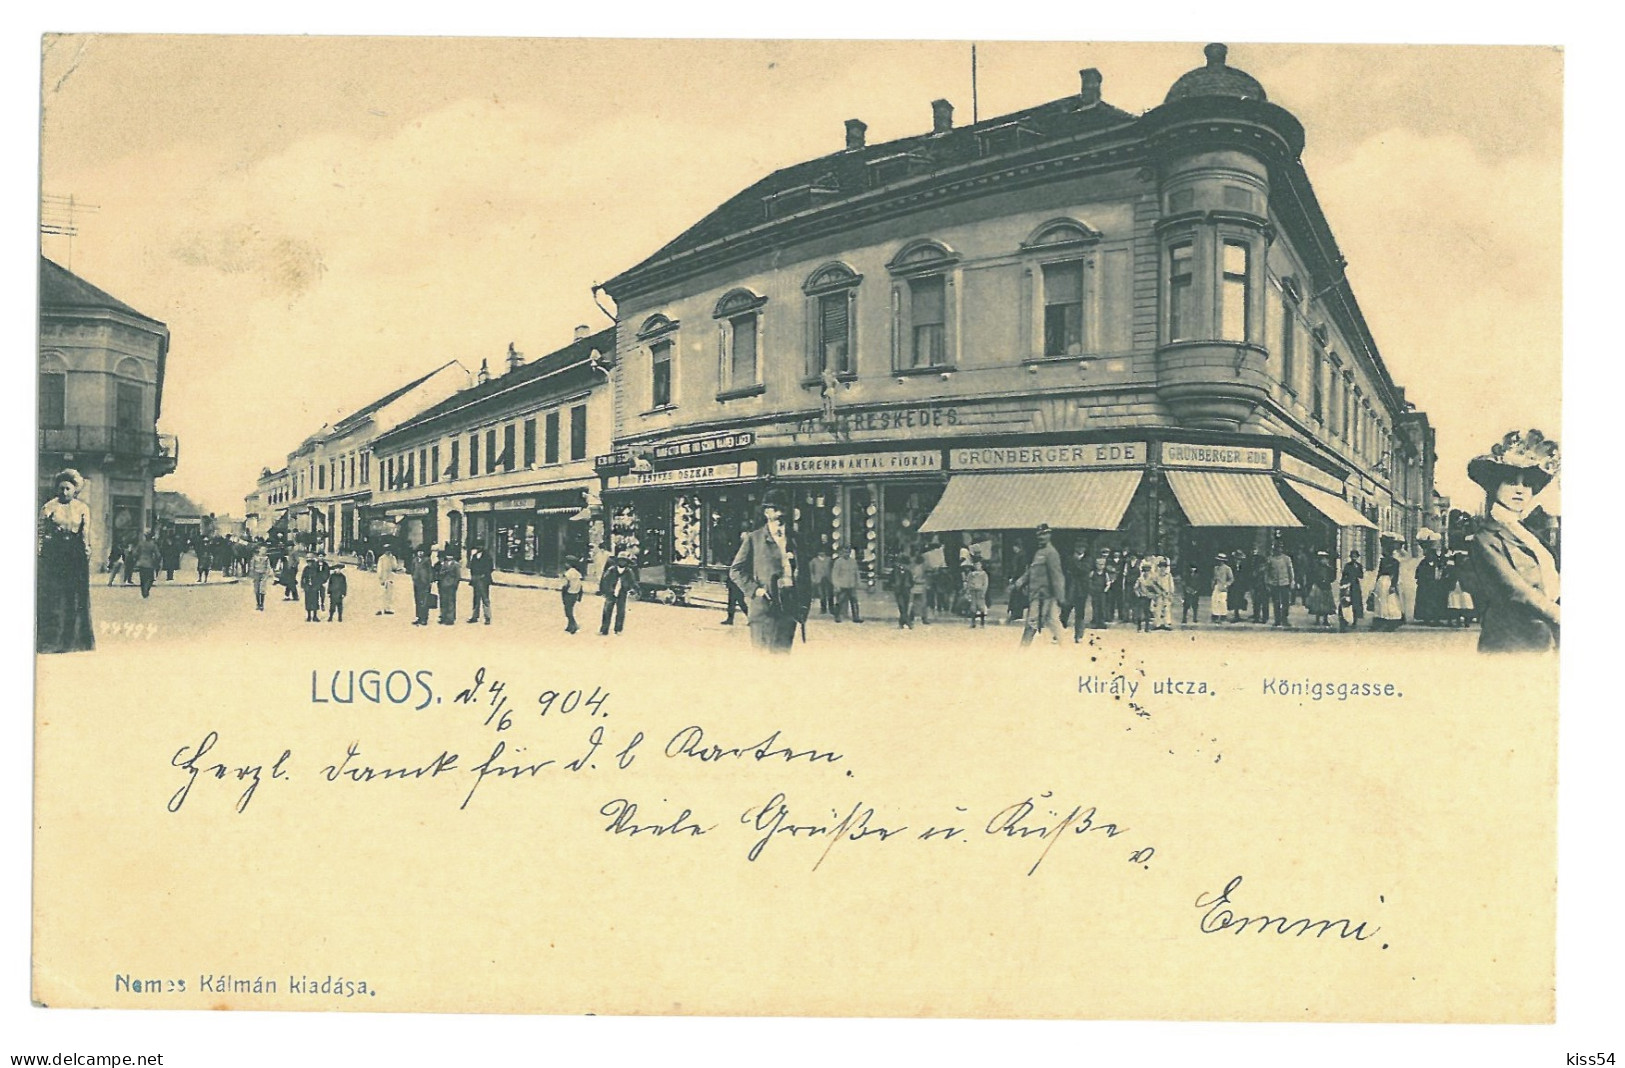 RO 63 - 16648 LUGOJ, Market, Stores, Litho, Romania - Old Postcard - Used - 1904 - Rumänien